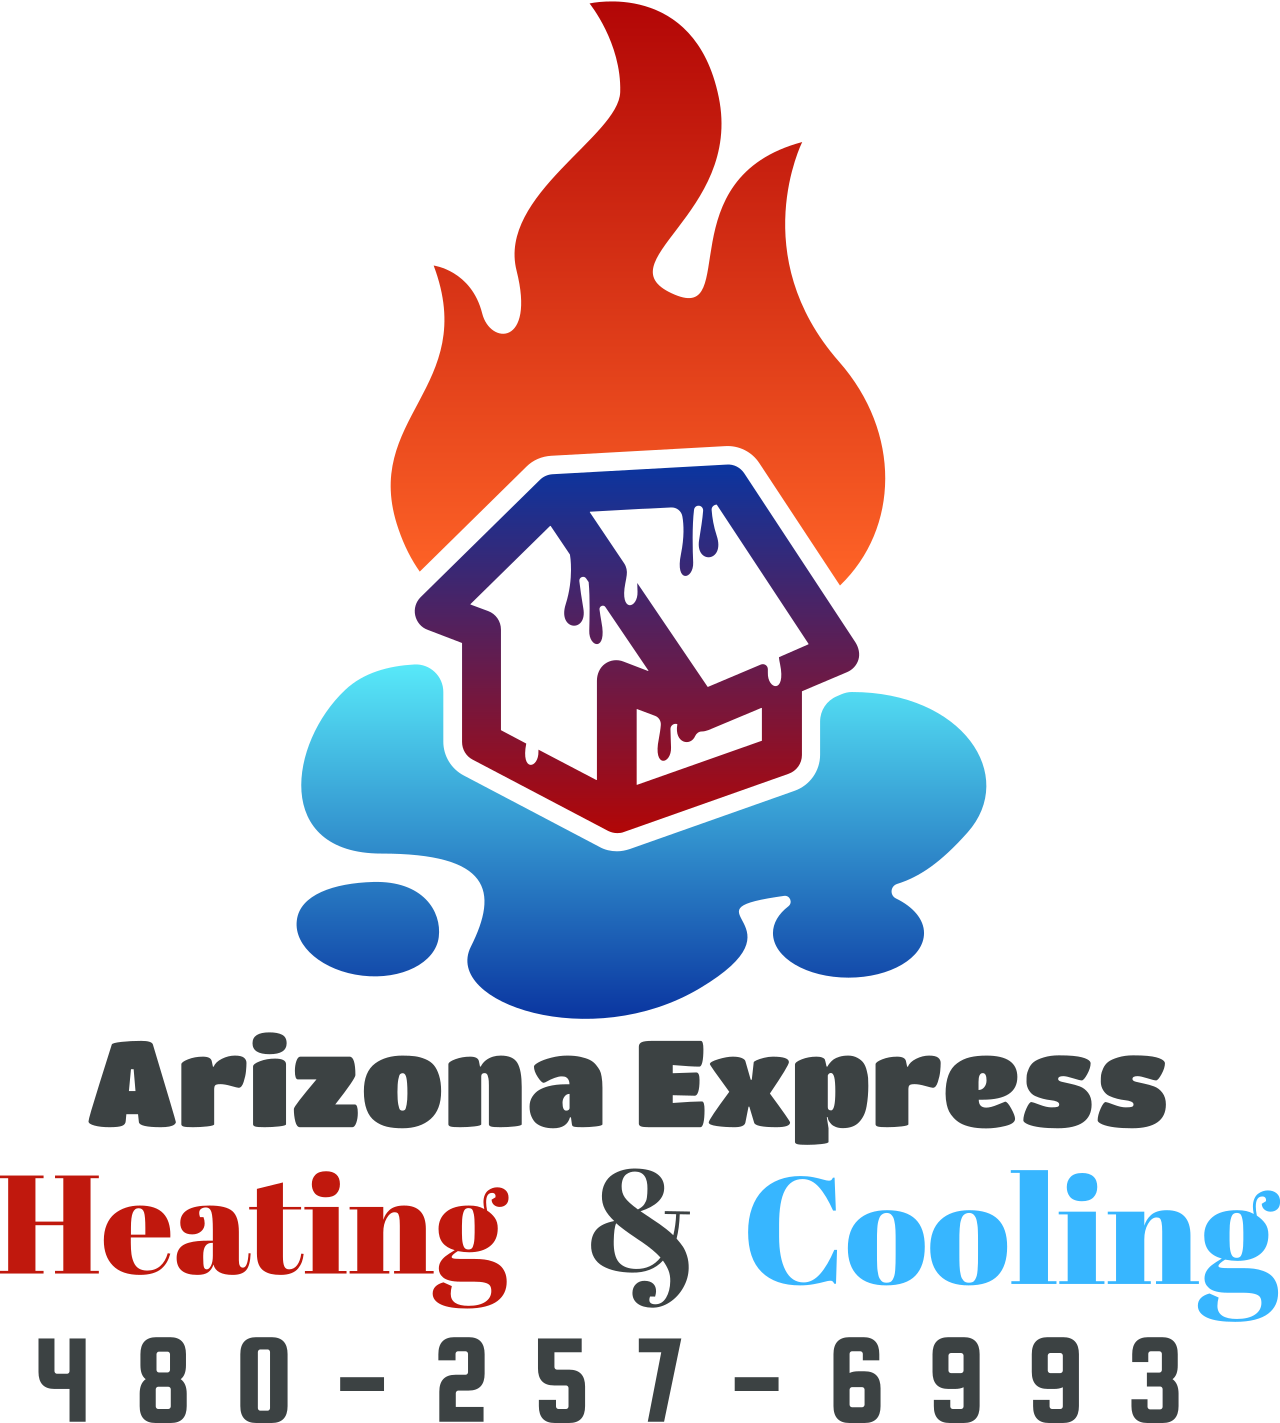 Arizona Express 's logo